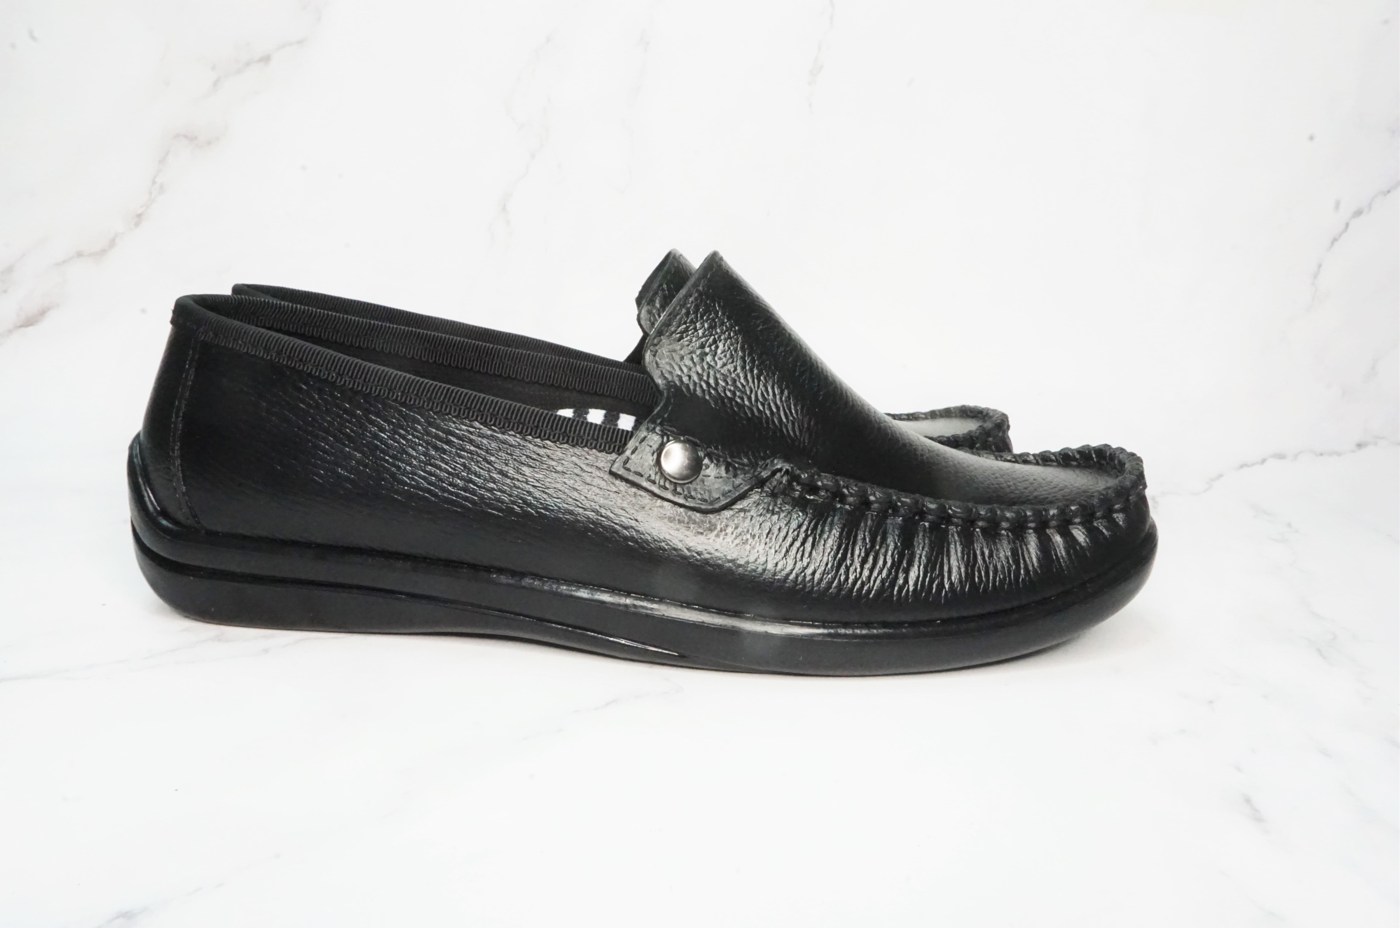 2300 Boat Rain Shoes (Japan)-Charming-BE-JP Size-2: 35S-偉豐鞋 WELL SHOE HK-Well Shoe-偉豐鞋-偉豐網-荃灣鞋店-Functional shoes-Hong Kong Tsuen Wan Shoe Store-Tai Wan Shoe-Japan Shoe-高品質功能鞋-台灣進口鞋-日本進口鞋-High-quality shoes-鞋類配件-荃灣進口鞋-香港鞋店-優質鞋類產品-水靴-帆布鞋-廚師鞋-香港鞋品牌-Hong Kong Shoes brand-長者鞋-Hong Kong Rain Boots-Kitchen shoes-Cruthes-Slipper-Well Shoe Hong Kong-Anello-Arriba-休閒鞋-舒適鞋-健康鞋-皮鞋-Healthy shoes-Leather shoes-Hiking shoes